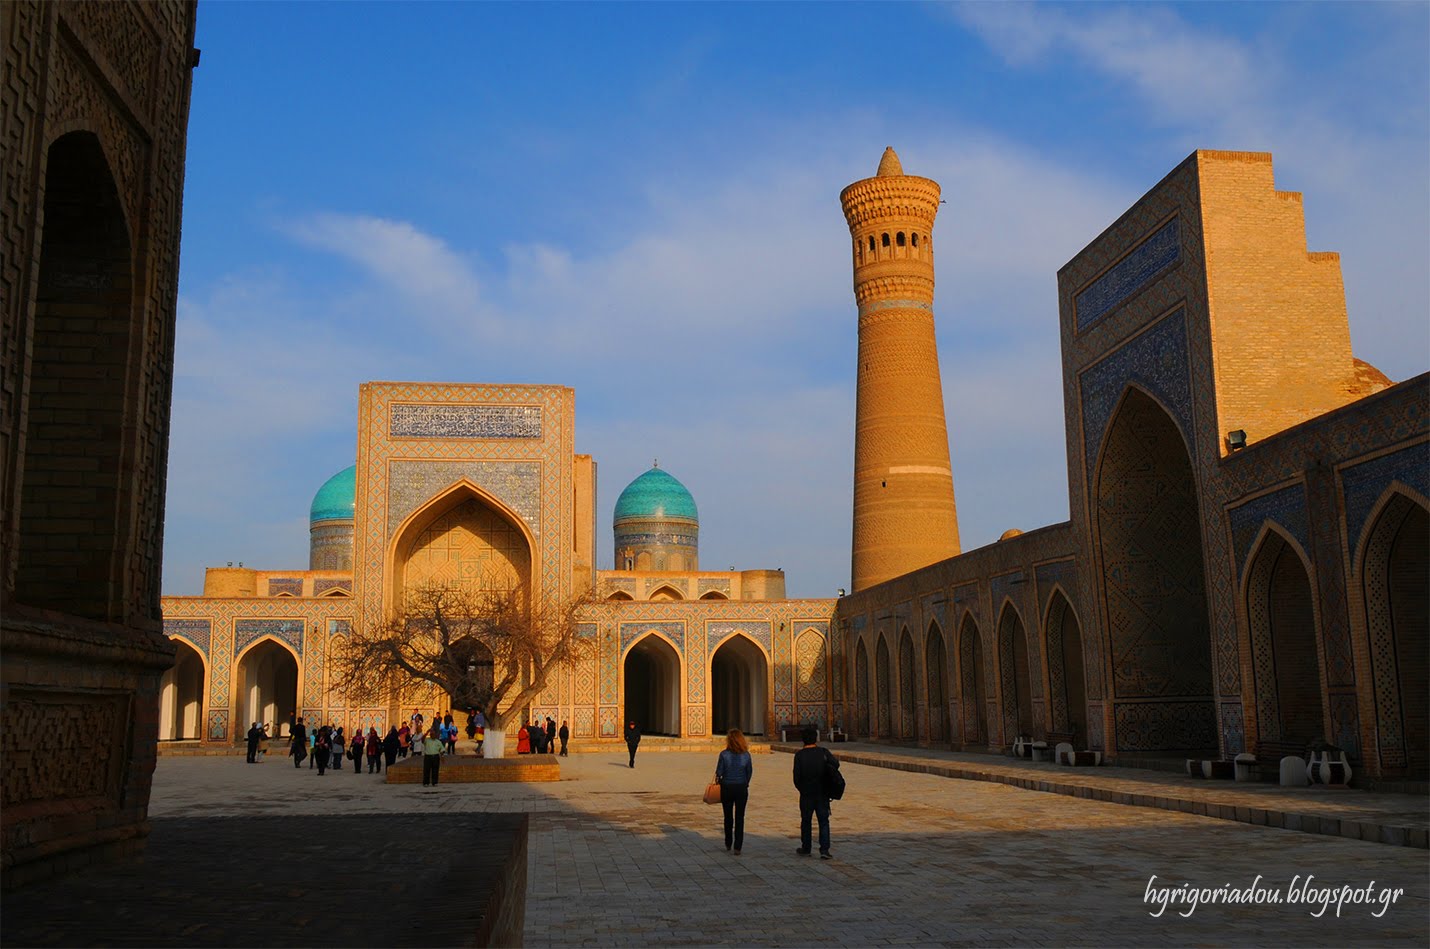 Bukhara: the Holy